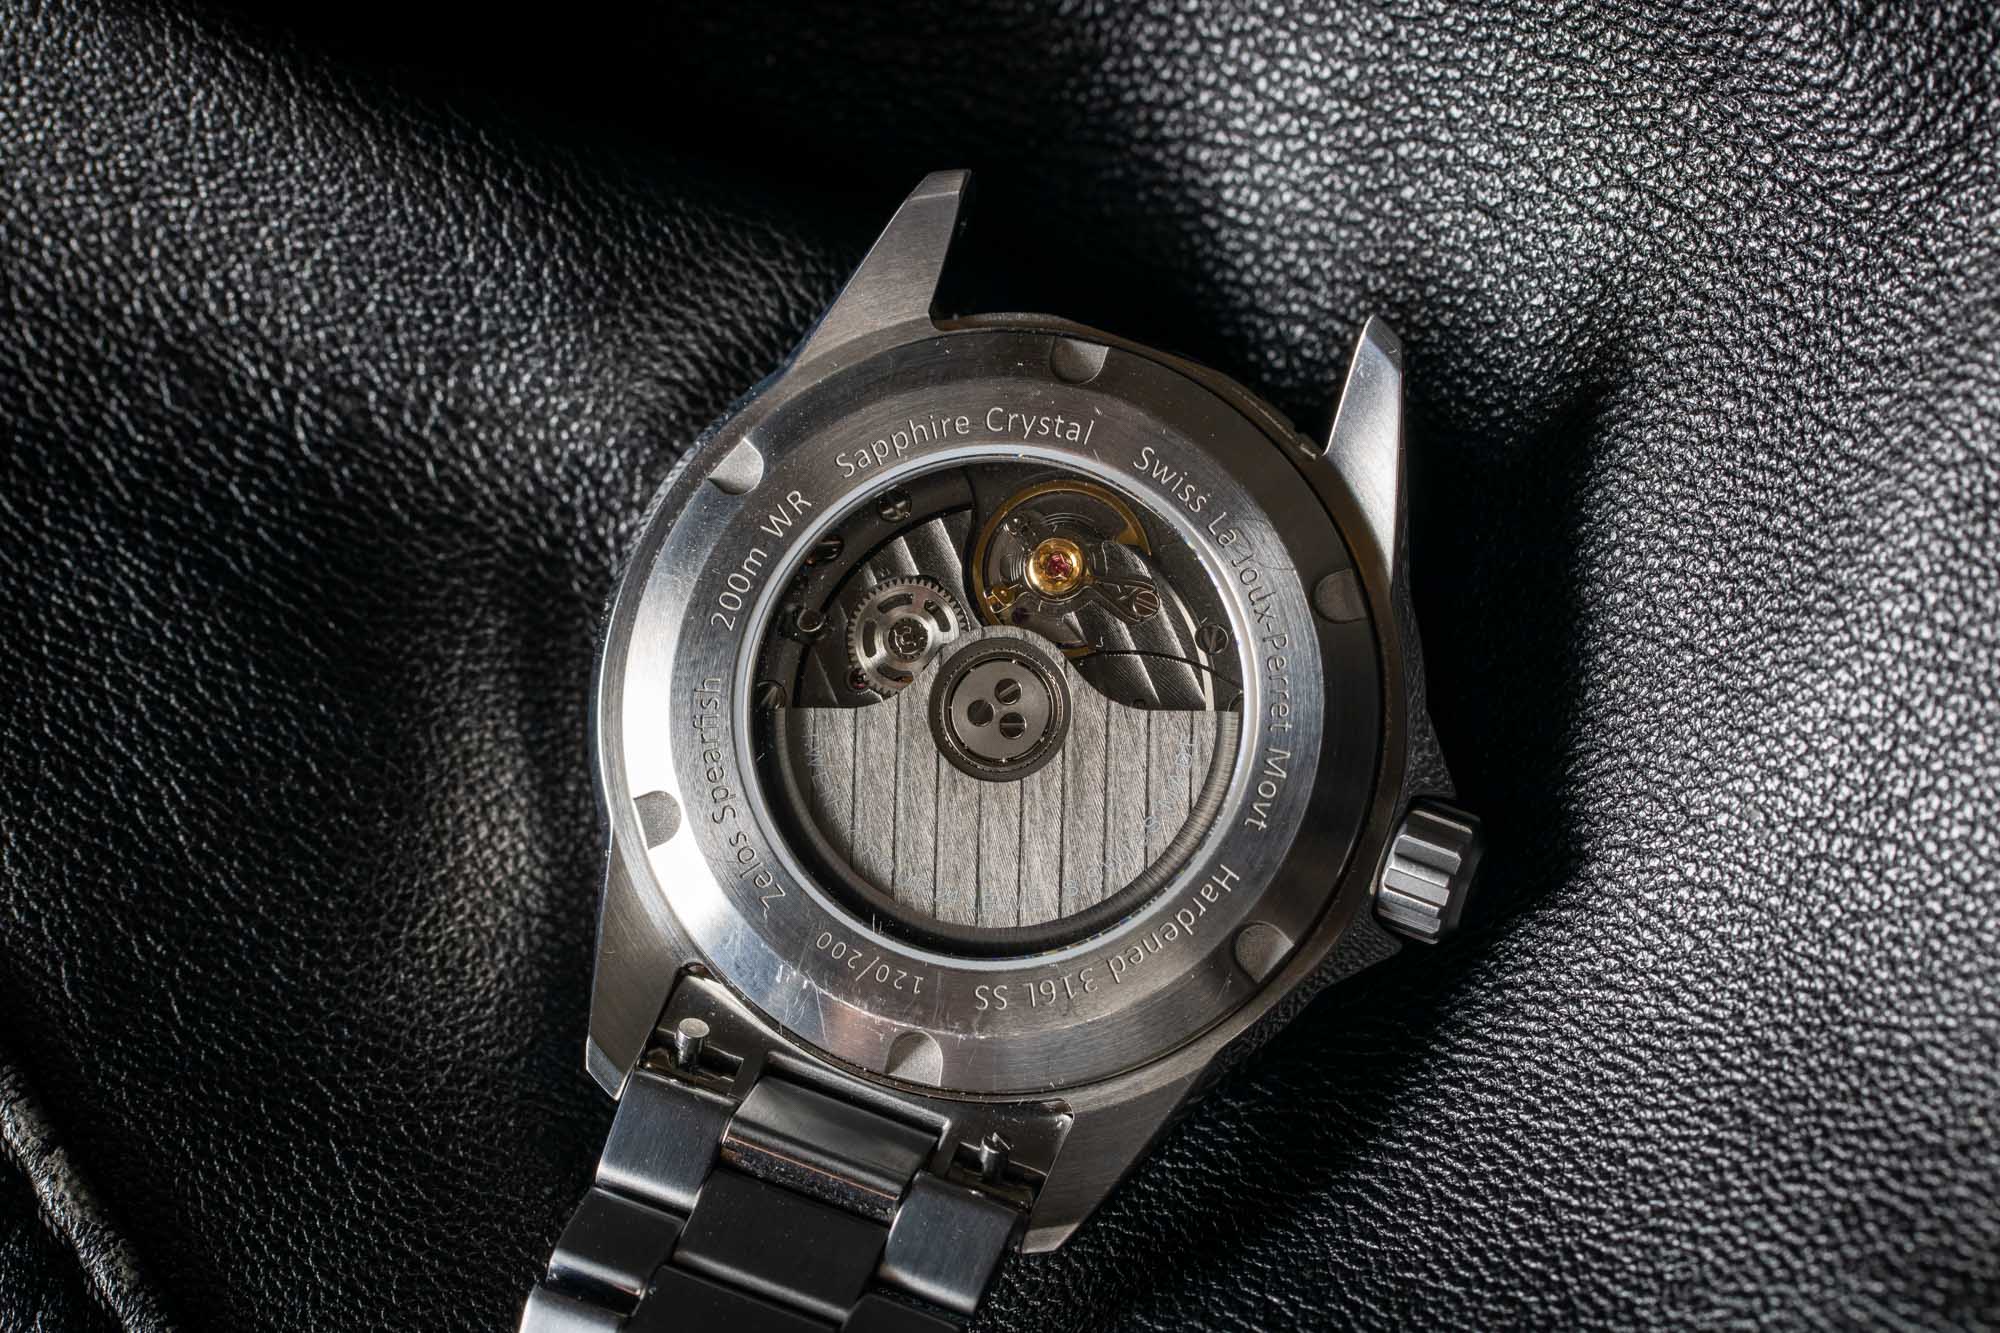 Практический обзор: часы Zelos Spearfish 40mm Diver Forged Carbon